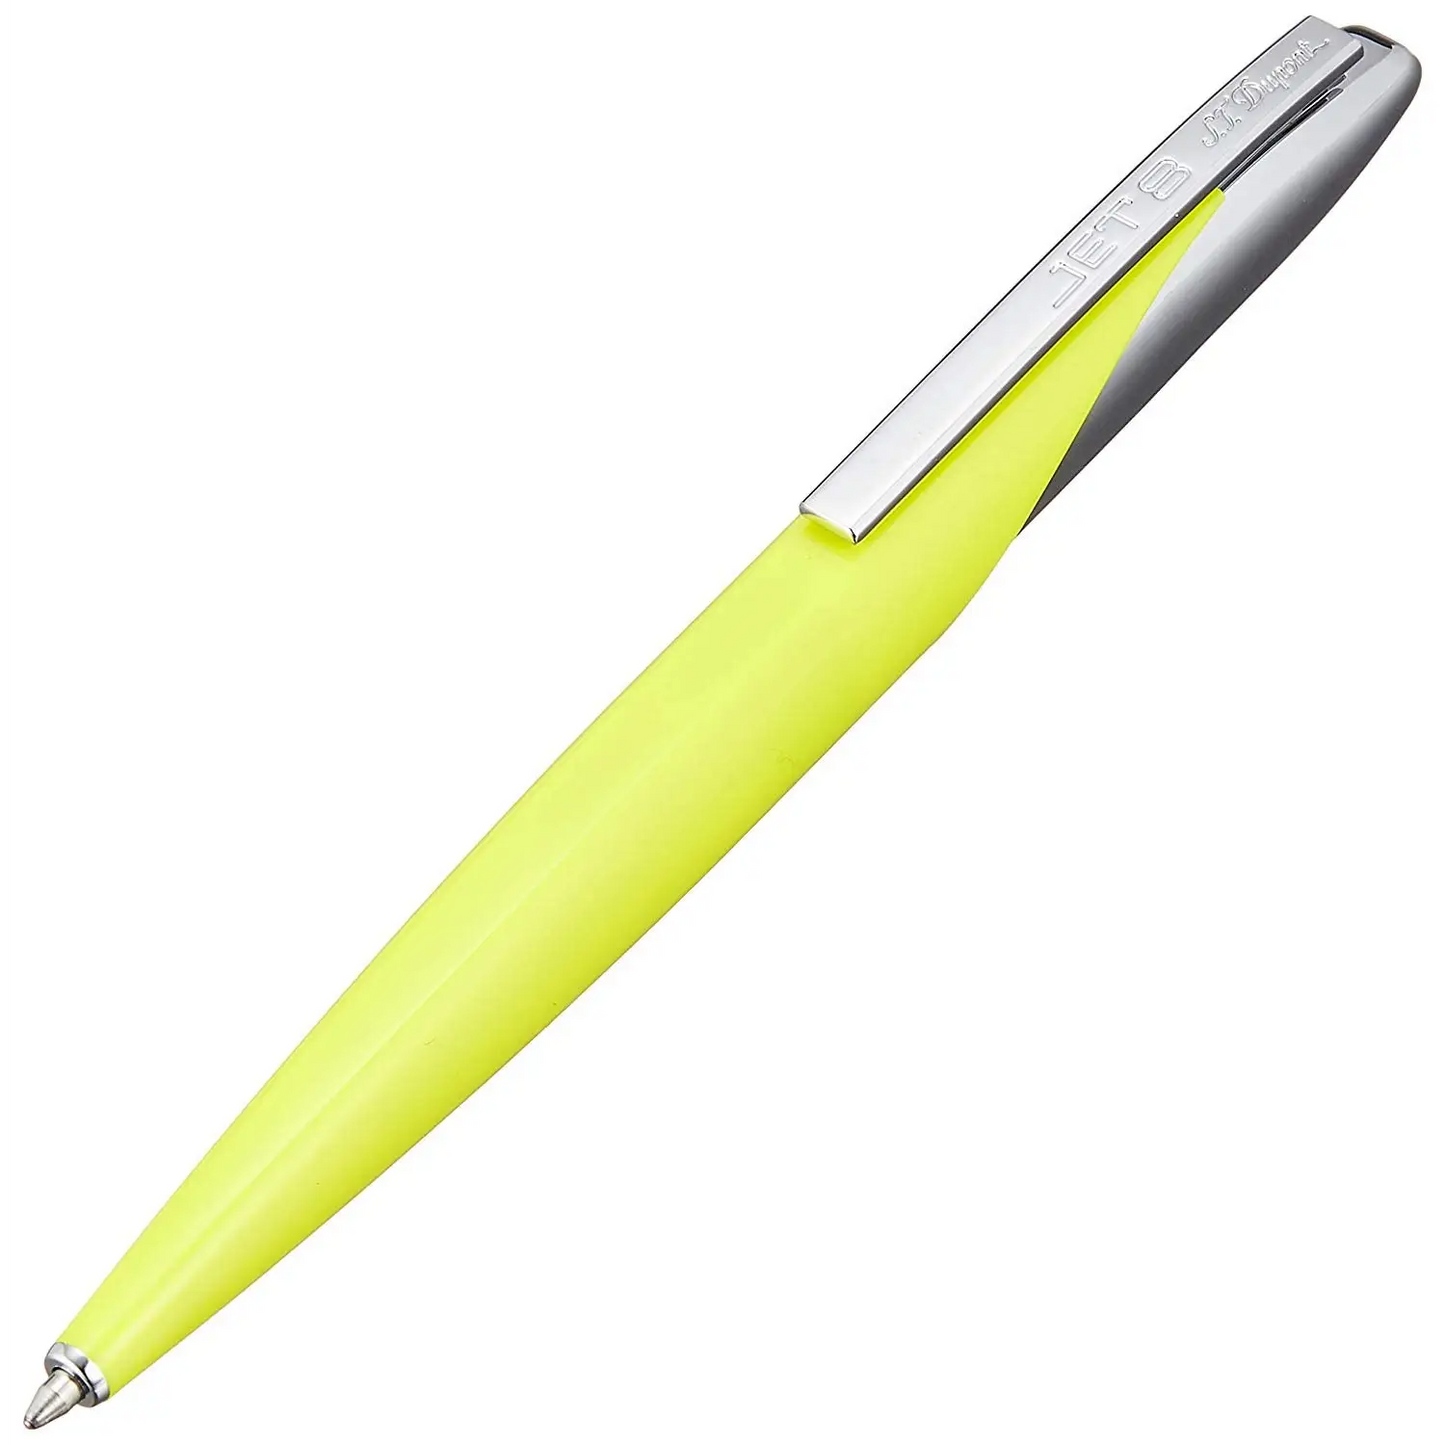 S.T. Dupont Jet 8 Ballpoint Pen in Sunny Yellow - Misc